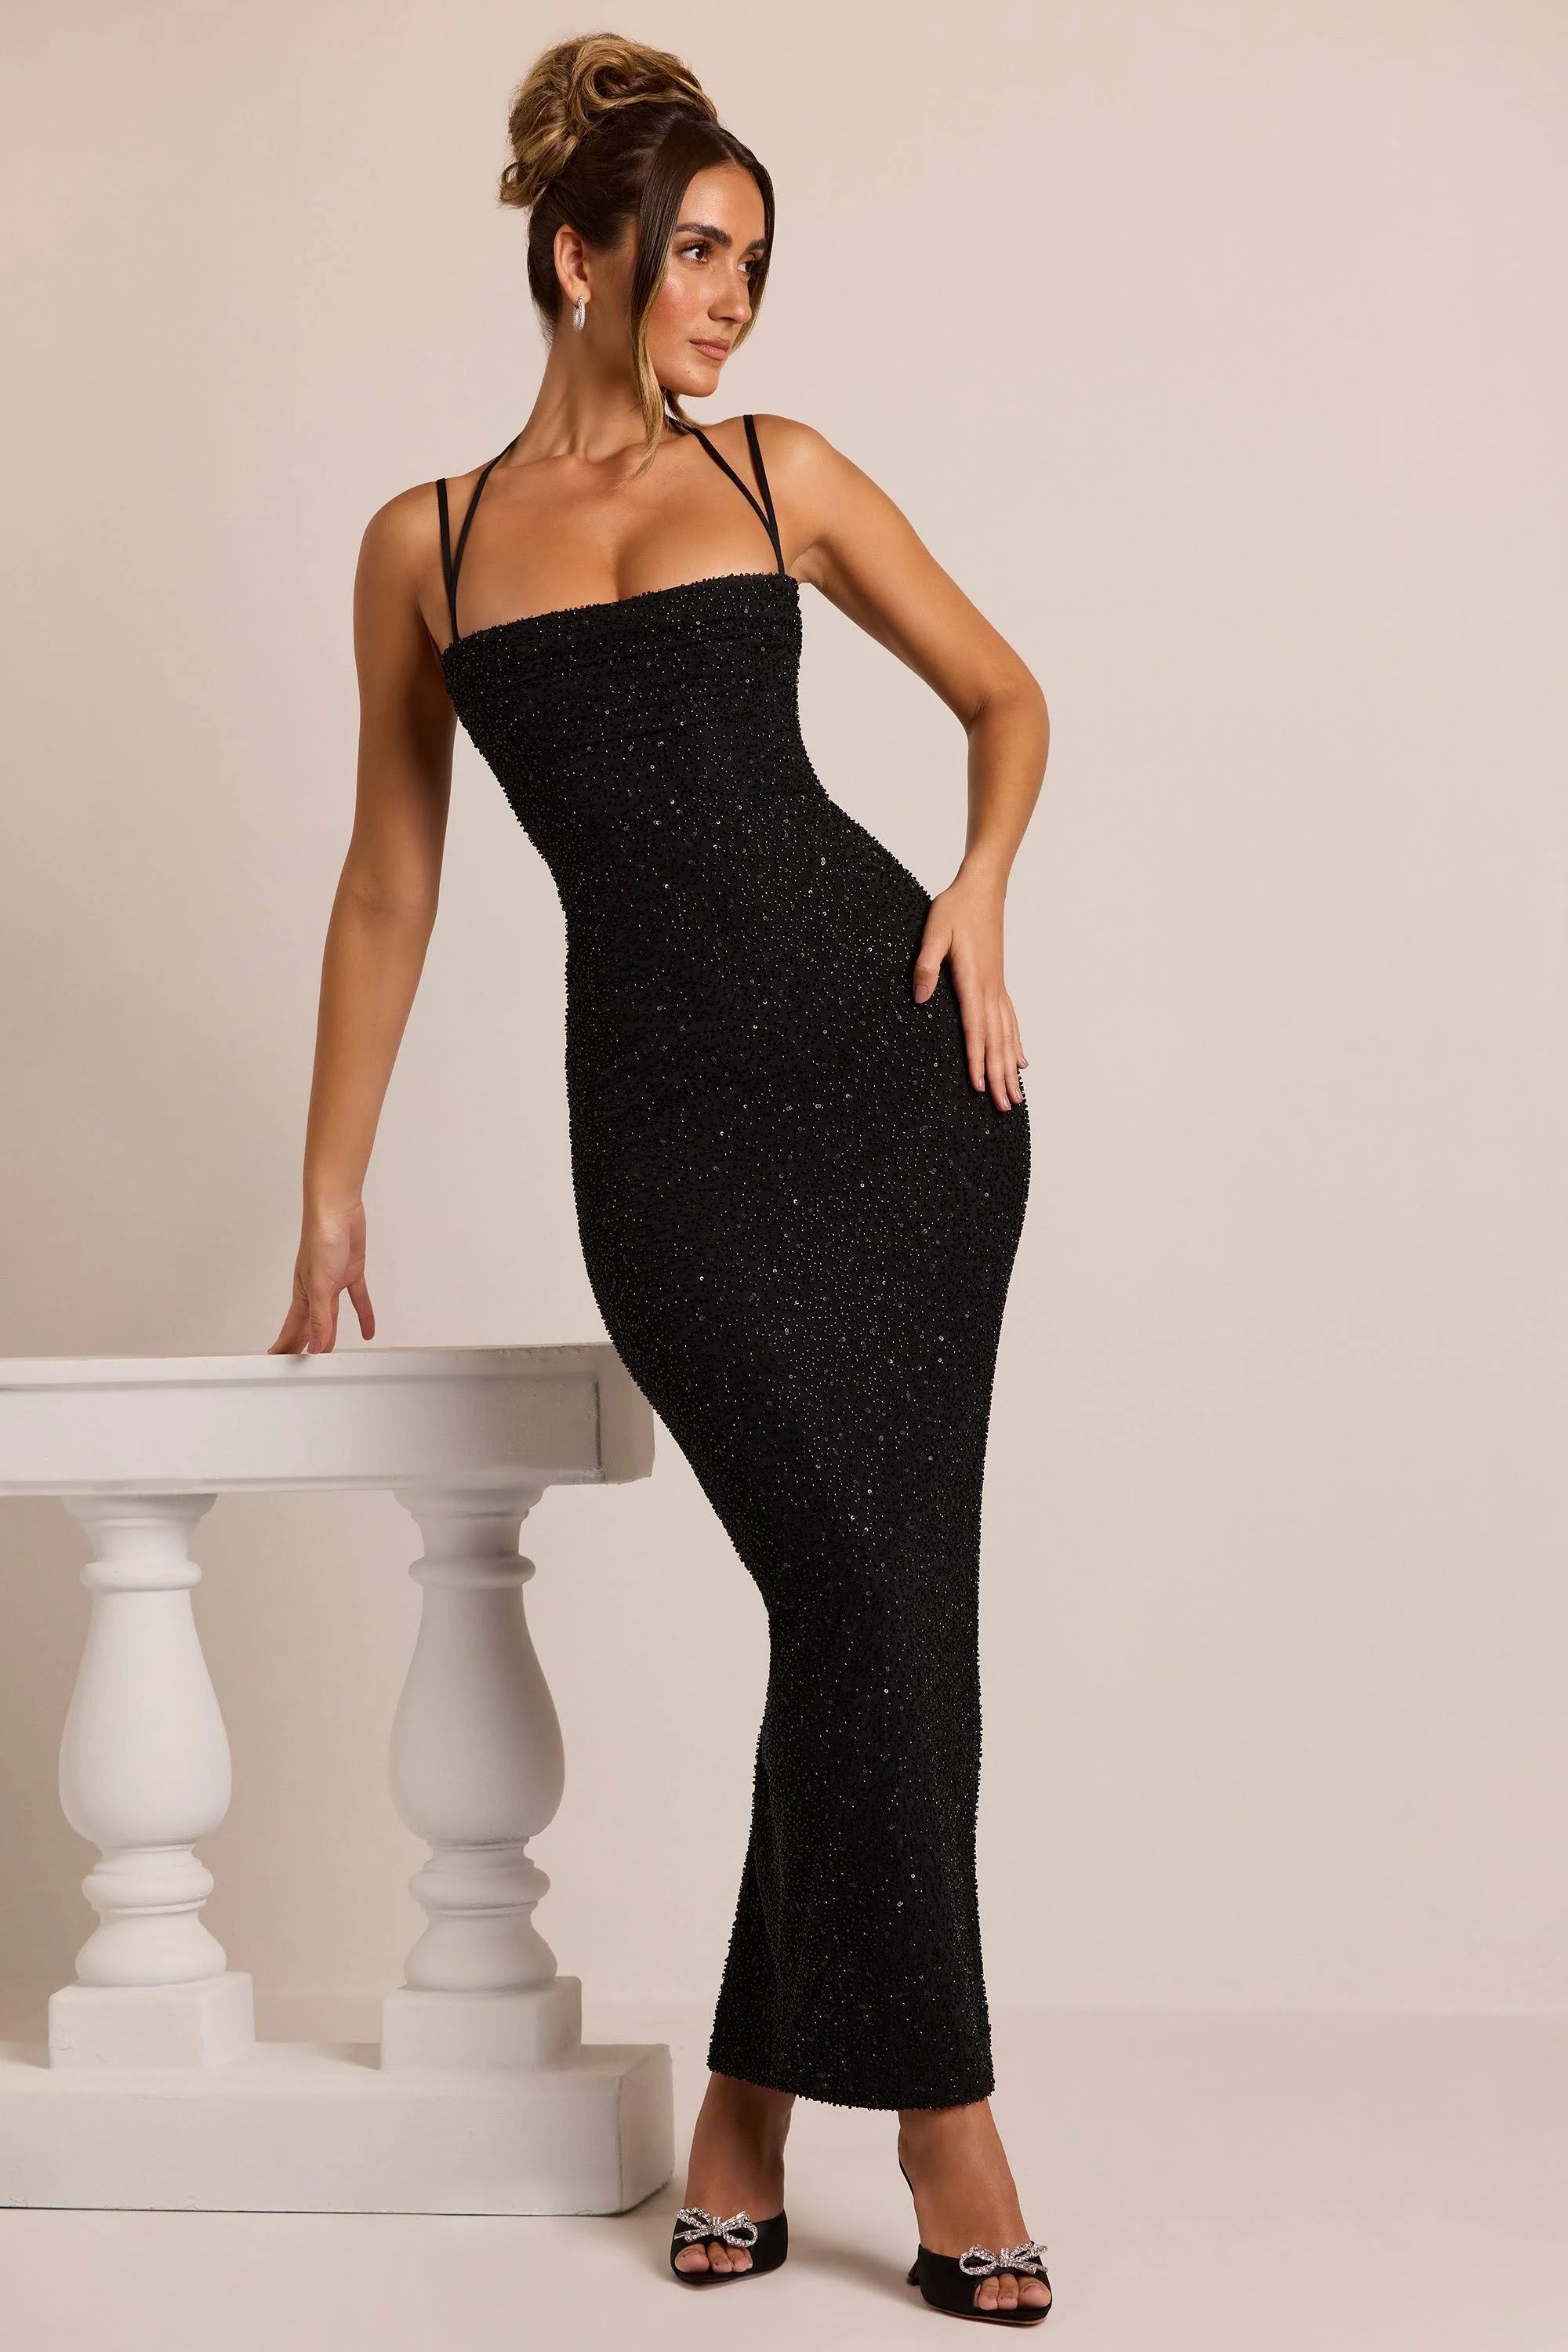 Embellished Black Maxi Dress for Formal Occasions | Image